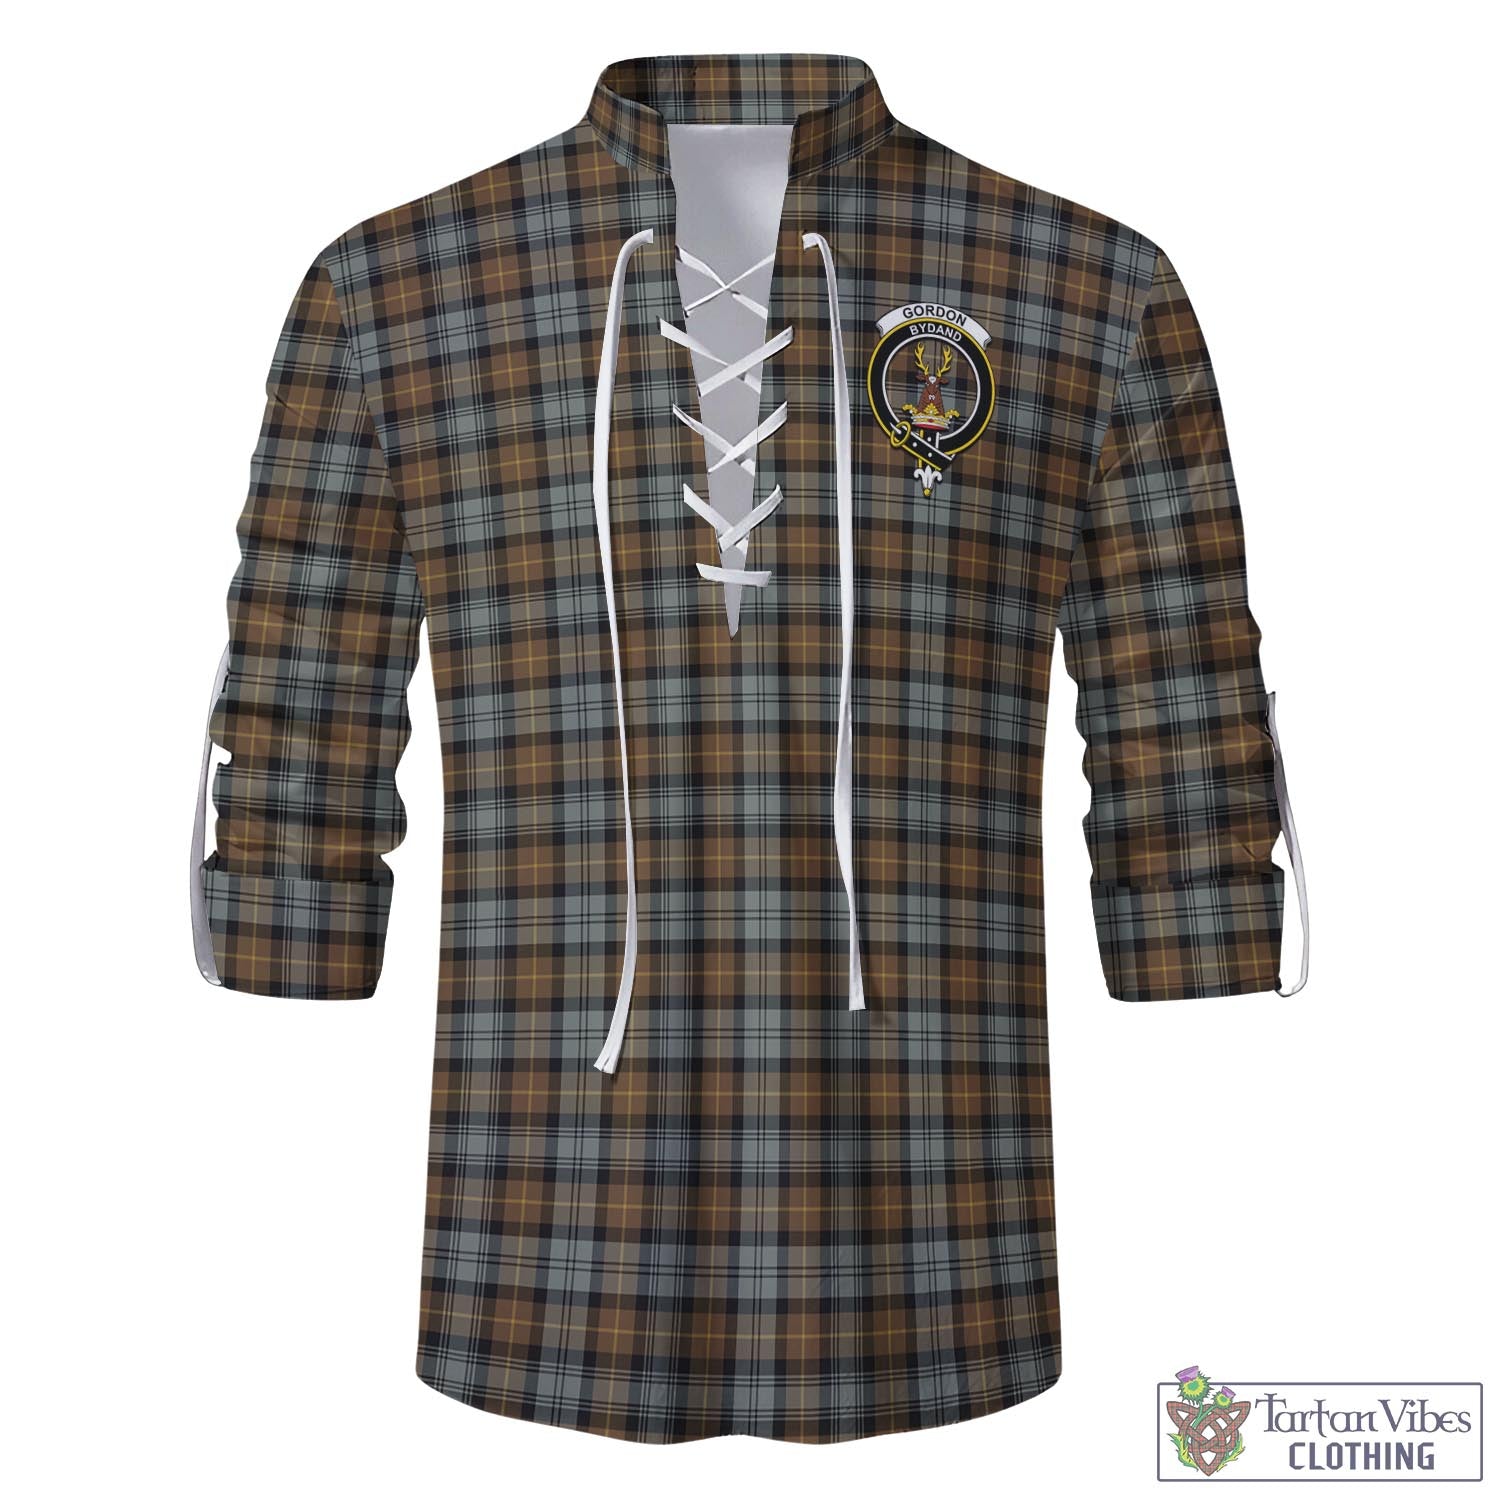 Tartan Vibes Clothing Gordon Weathered Tartan Men's Scottish Traditional Jacobite Ghillie Kilt Shirt with Family Crest